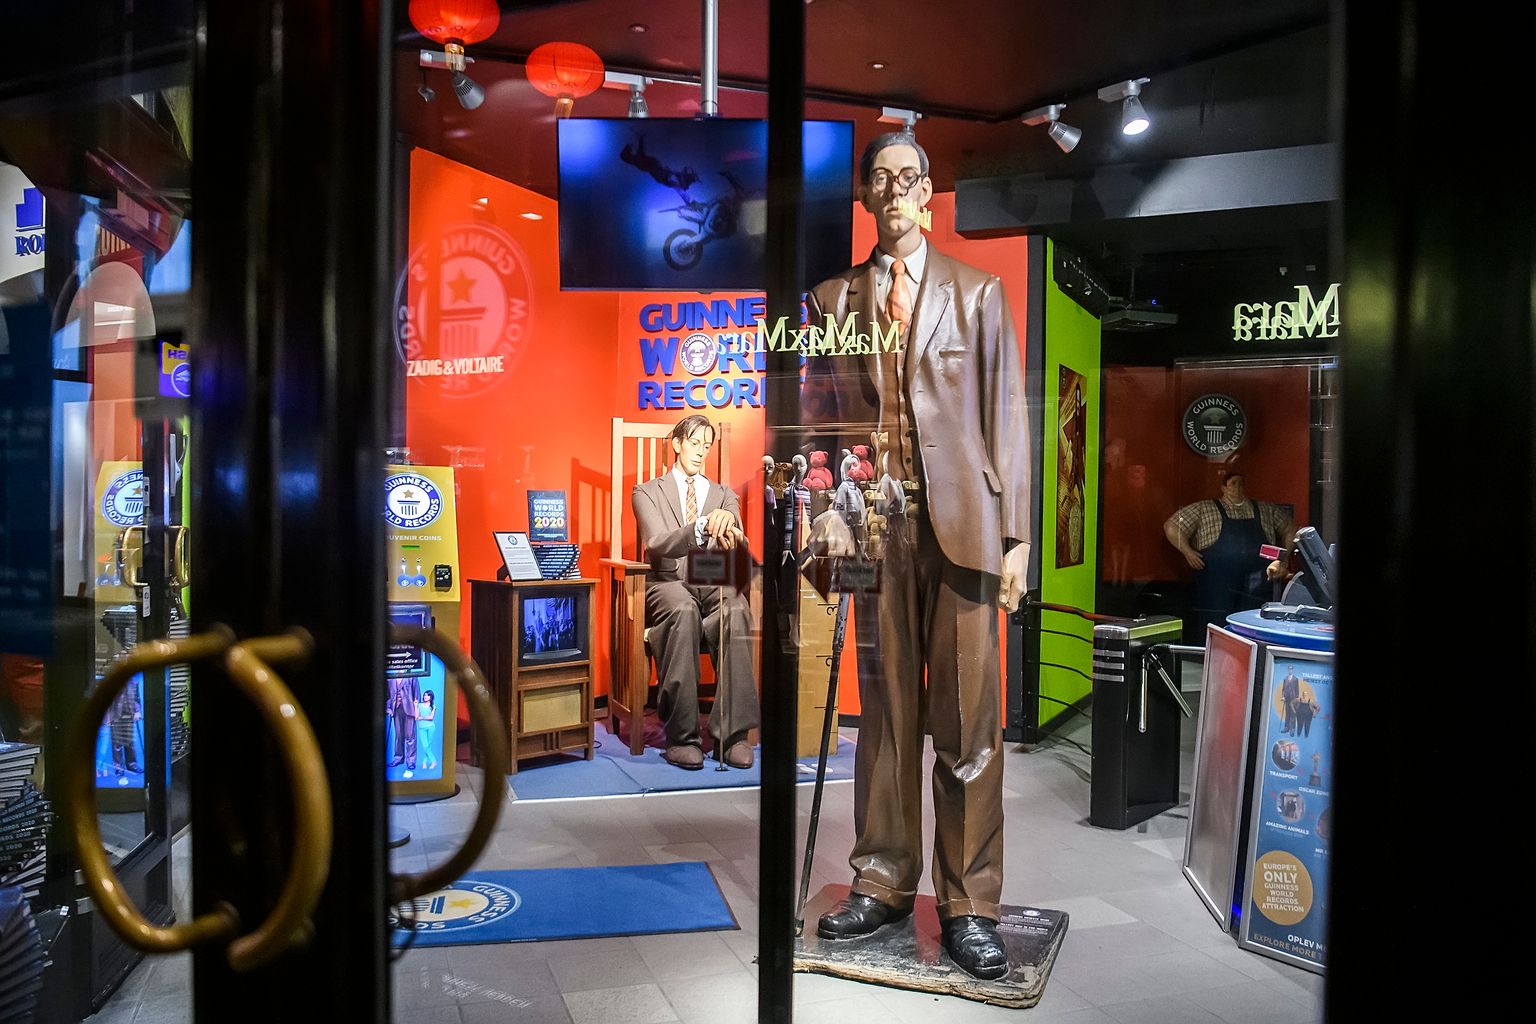 Guinnessi rekordite muuseum Kopenhaagenis. 
Maailma kõige pikem mees Robert Wadlow.